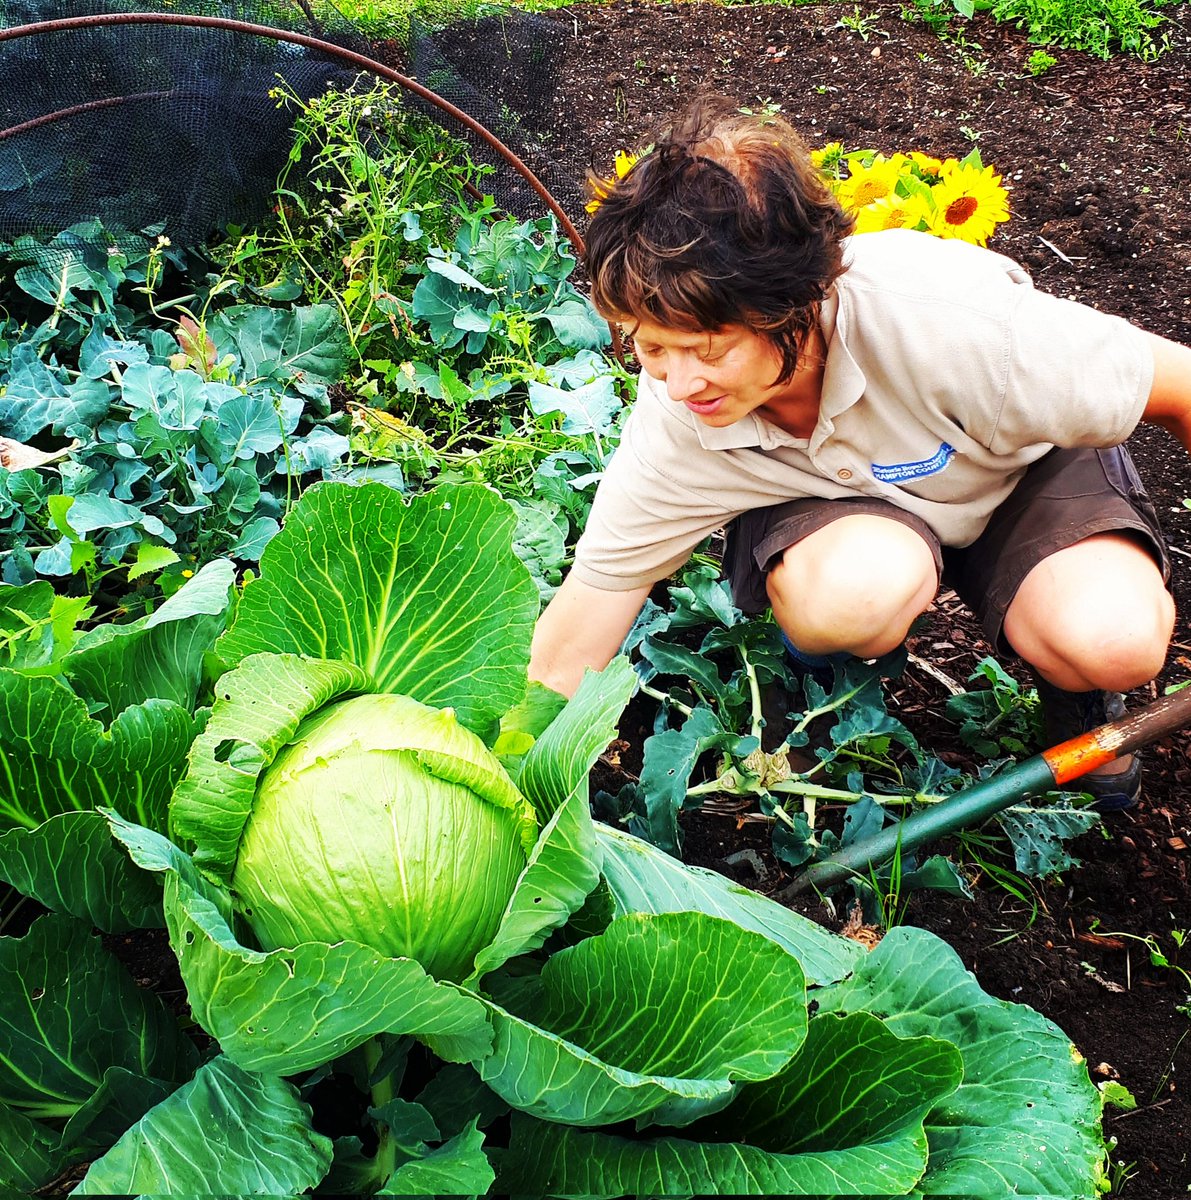 Hilary, the Kitchen Garden Manager,  wrestling with a Belarusskaya 455 and it tasted great! 😋
#gyo #loveveg #vegetablegarden #veggardener #historicgarden #gardens #vegetables #gardening